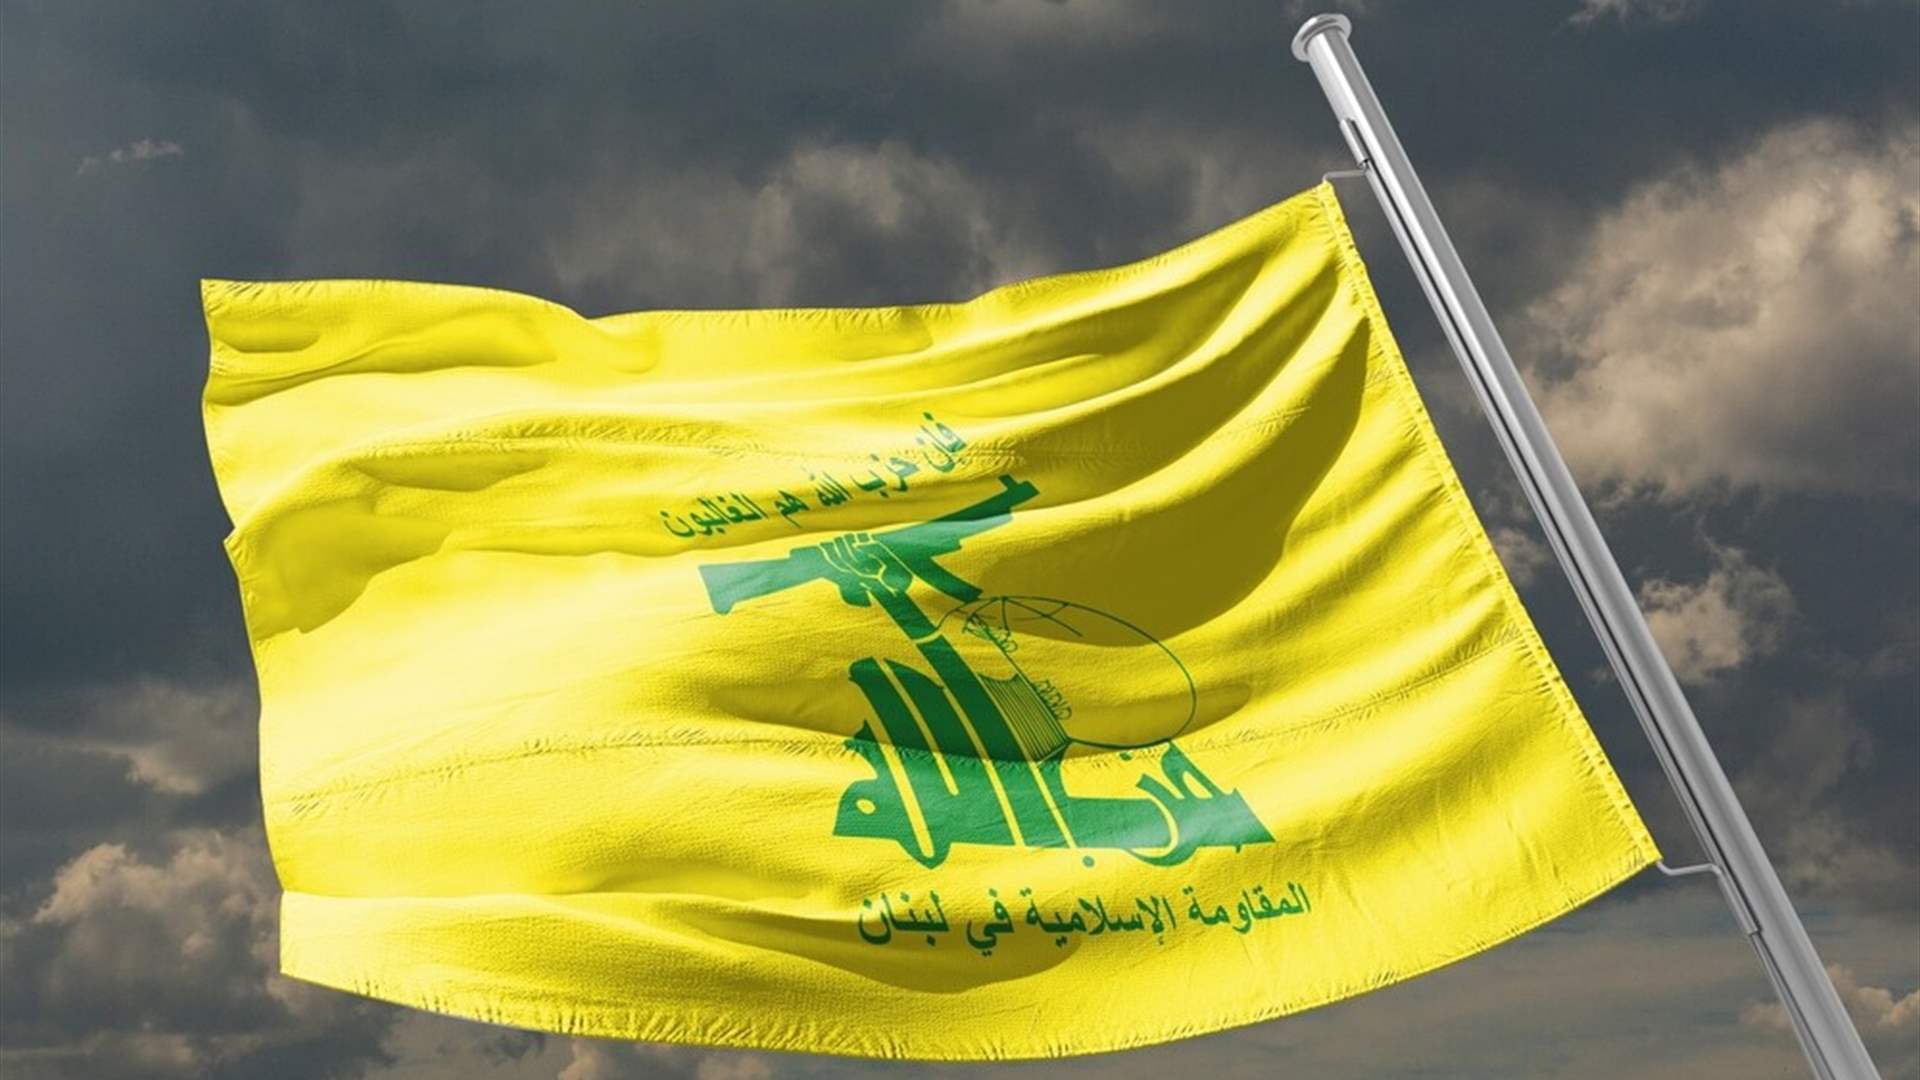 Senior Hezbollah leader confirmed dead in Israeli strike: Reuters reports, citing Israeli Public Broadcasting Corporation 